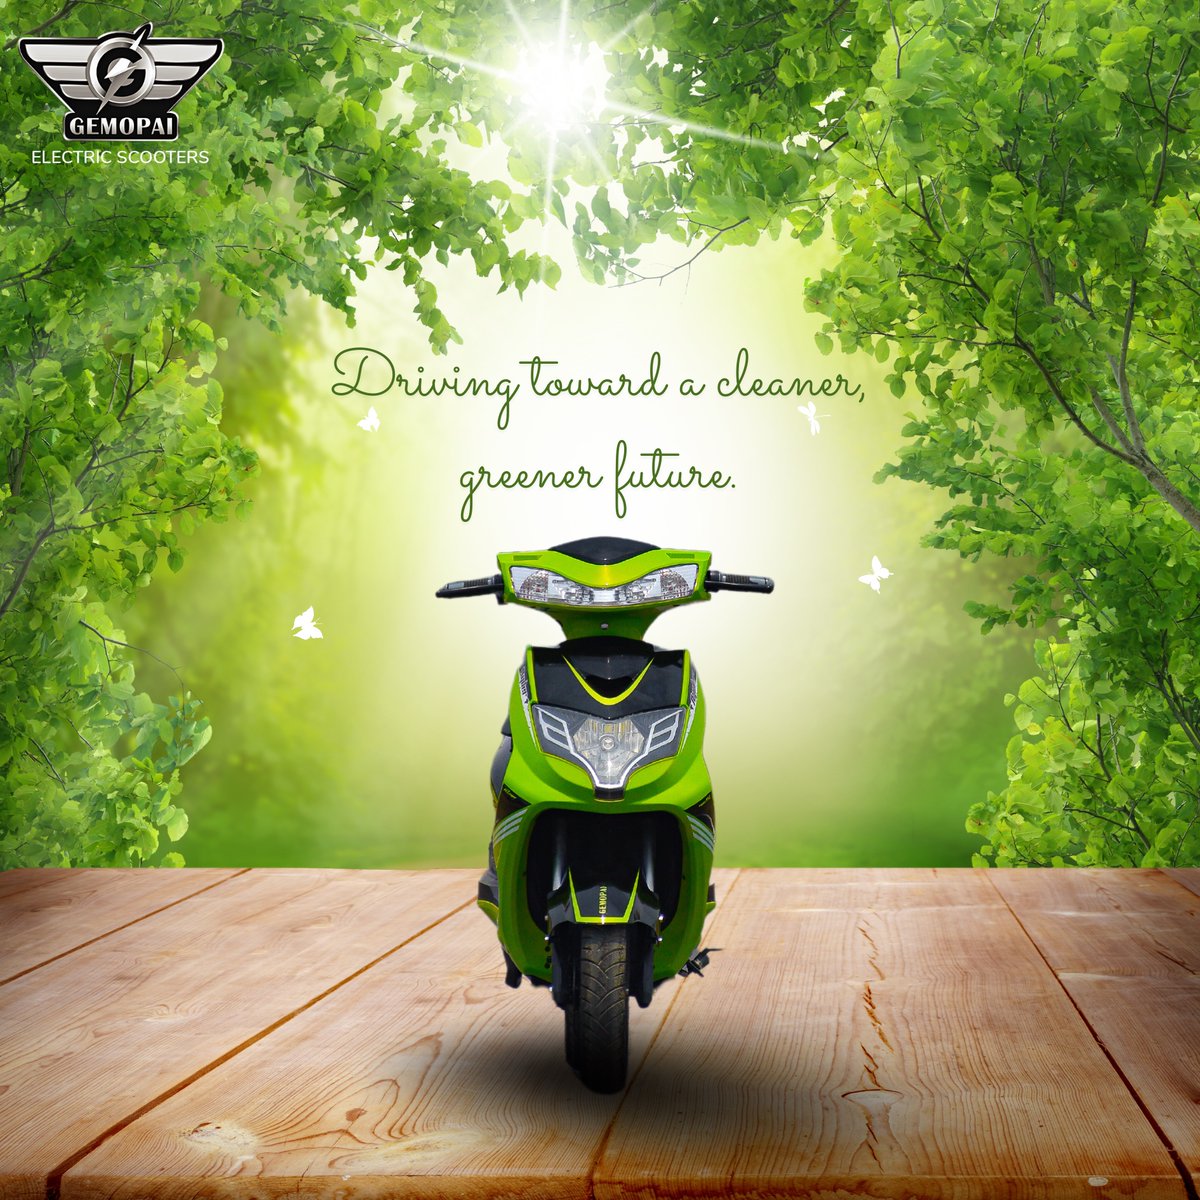 Ride electric, Ride with Gemopai ⚡🌱✨
#gemopai #clean #greenenergy #ElectricCars #electricvehicle #ev #TwitterNews #future